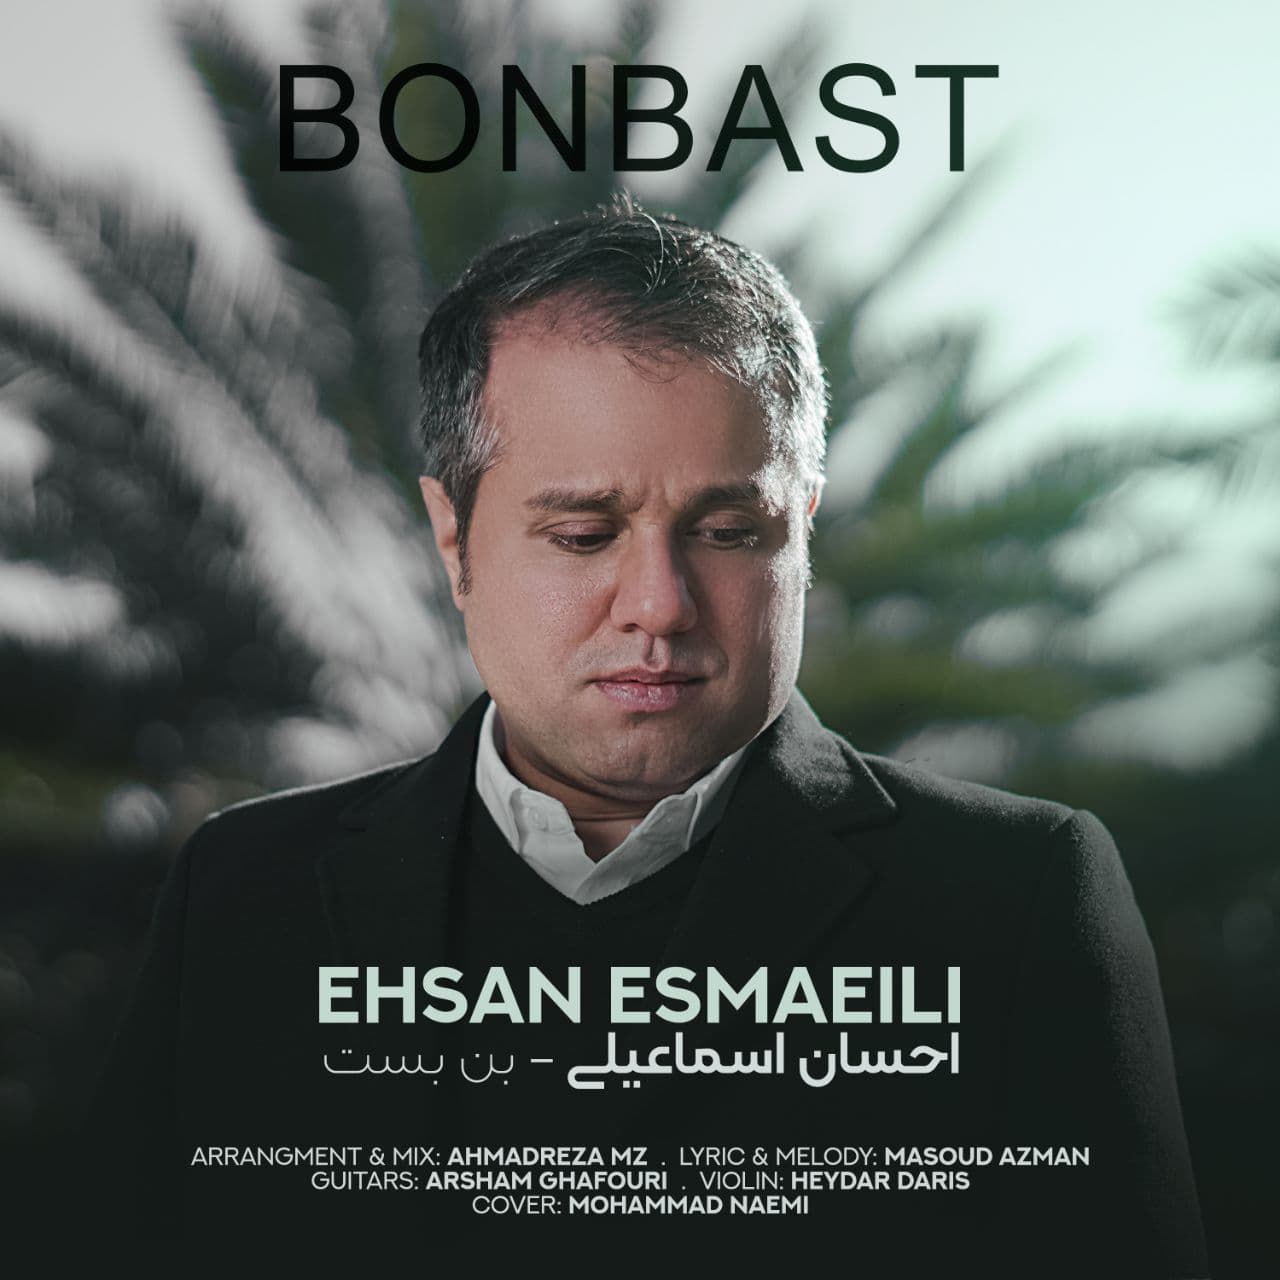 Ehsan Esmaeili – Bonbast